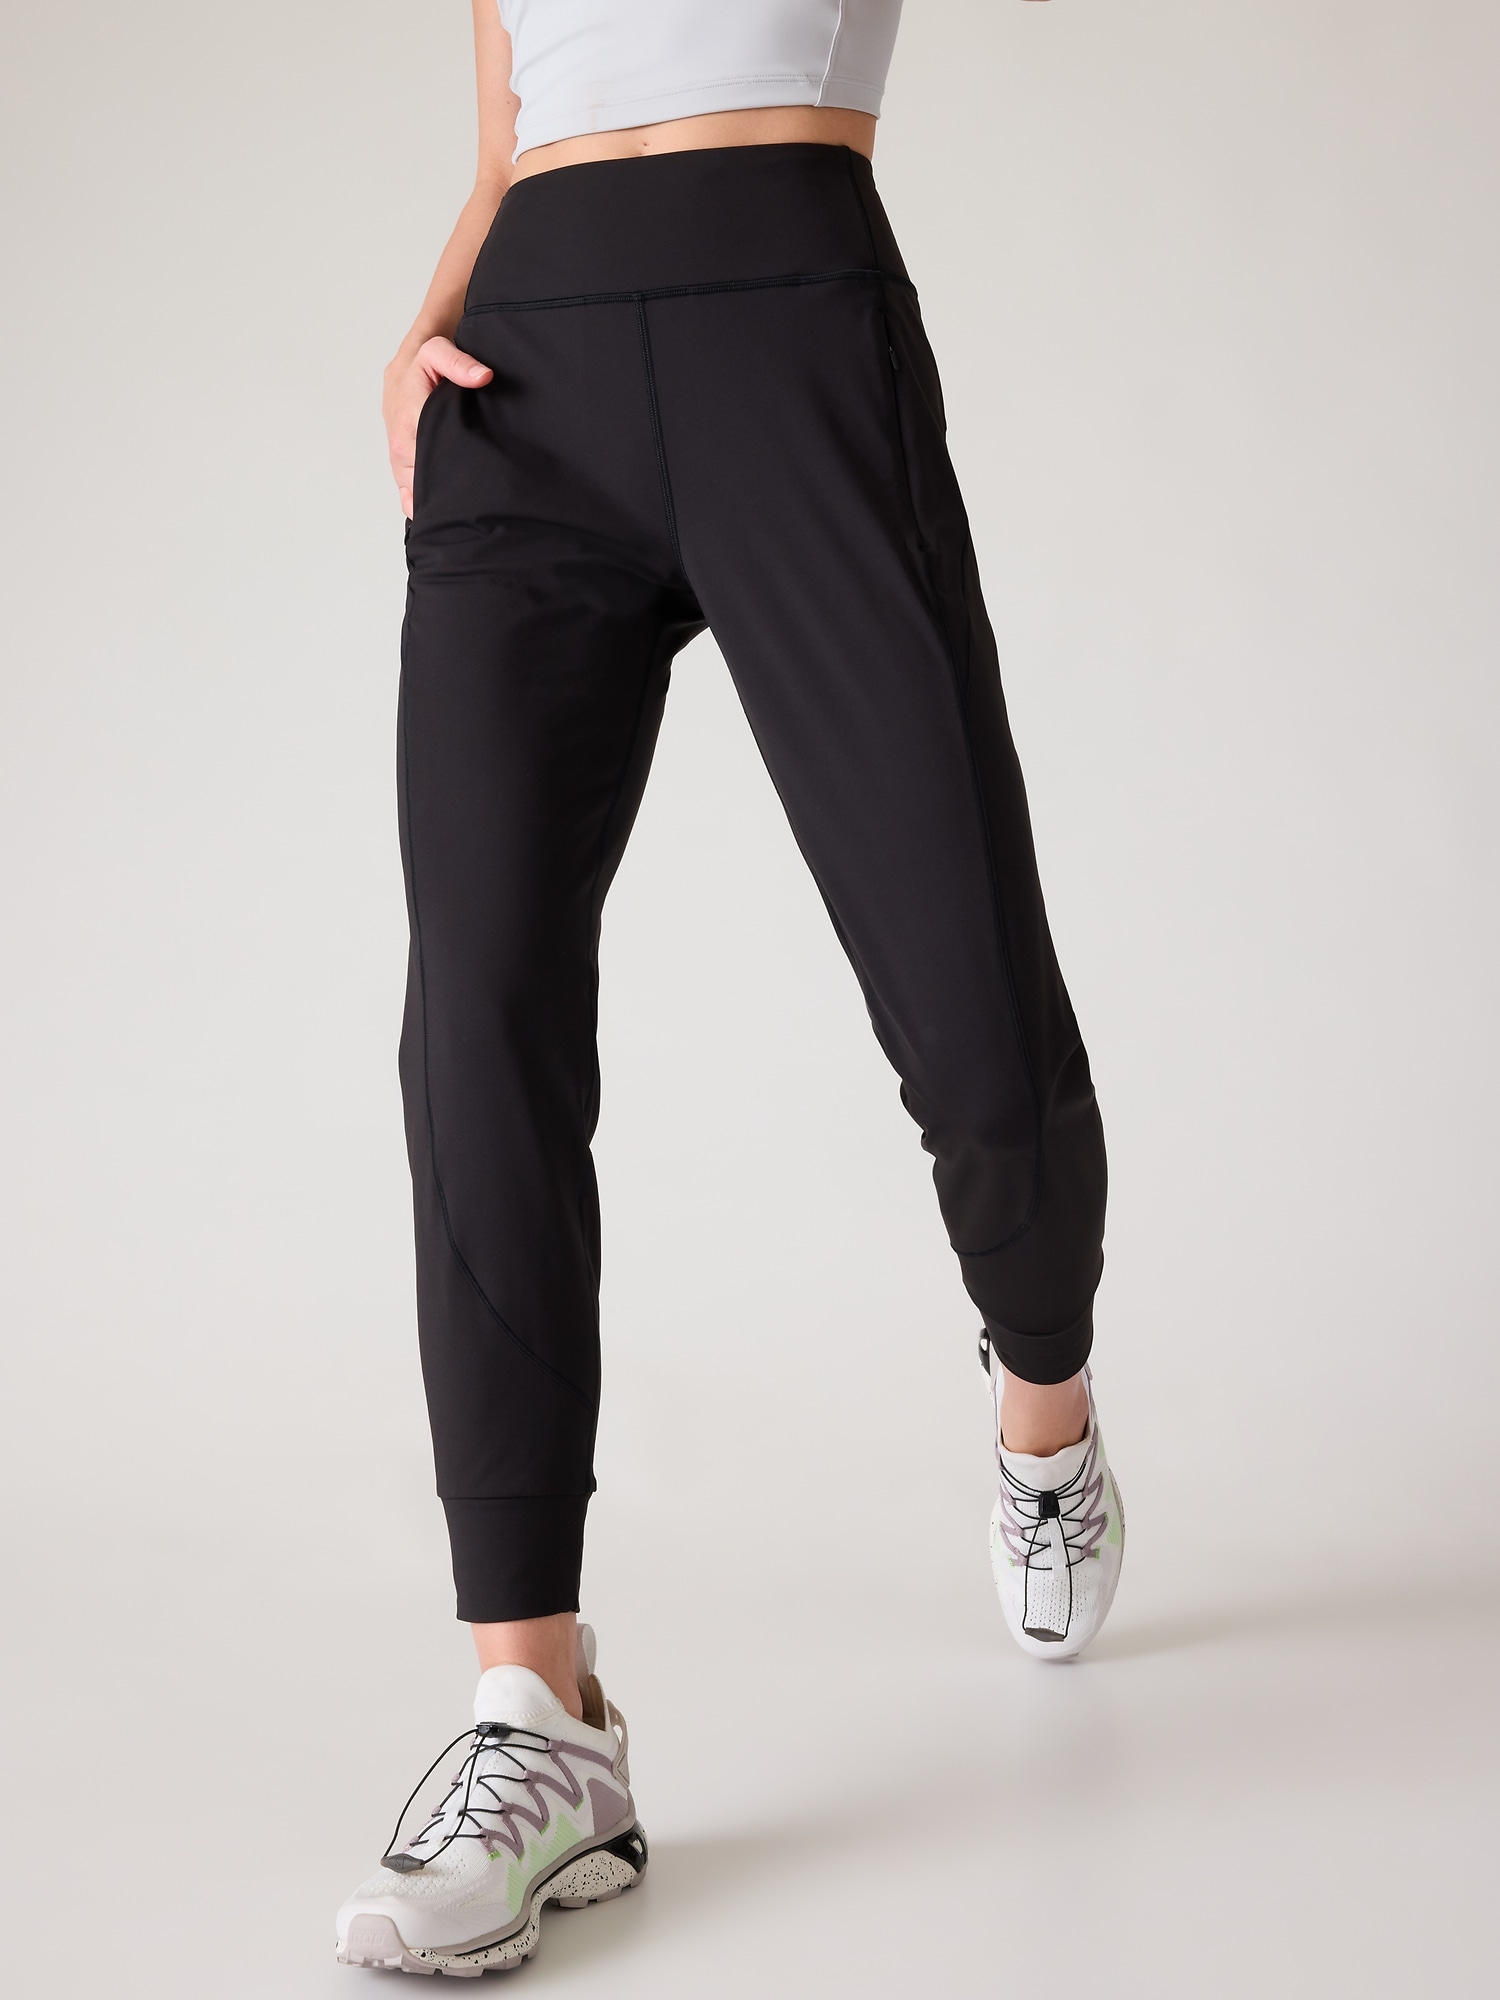 Women's Size 0 ATHLETA Black Tie Bottom Athletic Pants Jogger Zipper Leg  Pocket